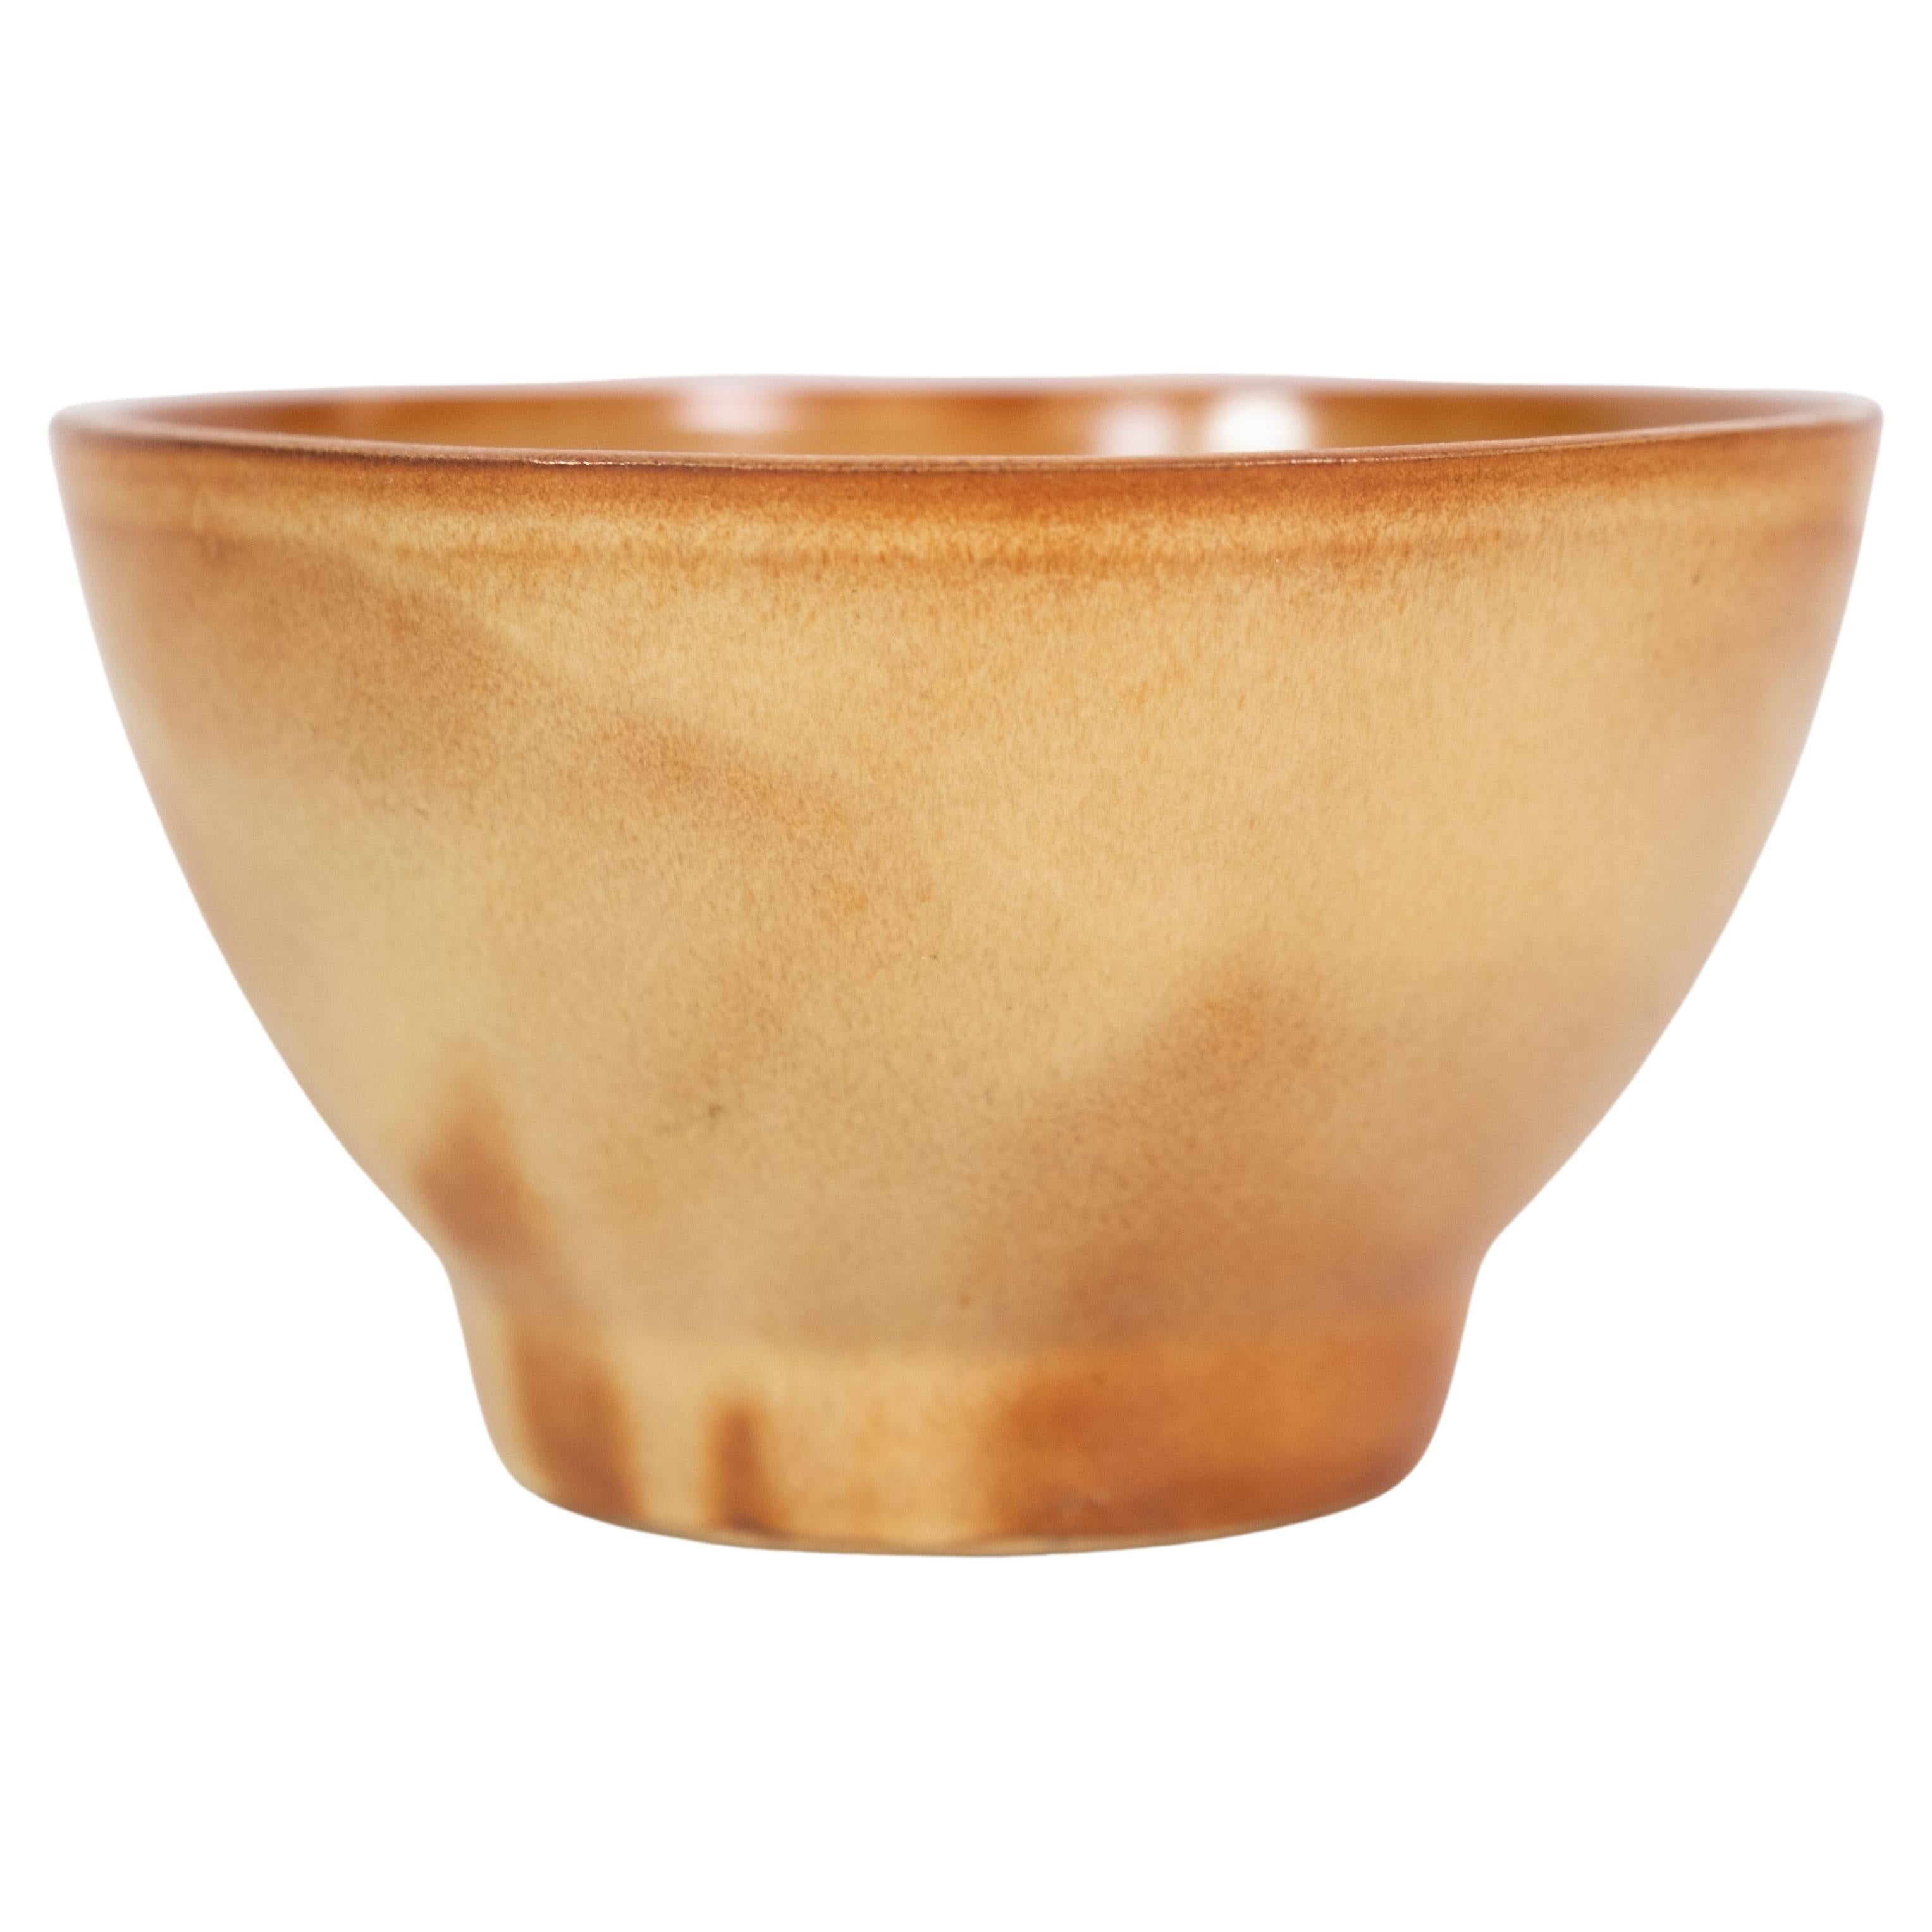 Ceramic Bowl, Orange / Yellow, 1960s